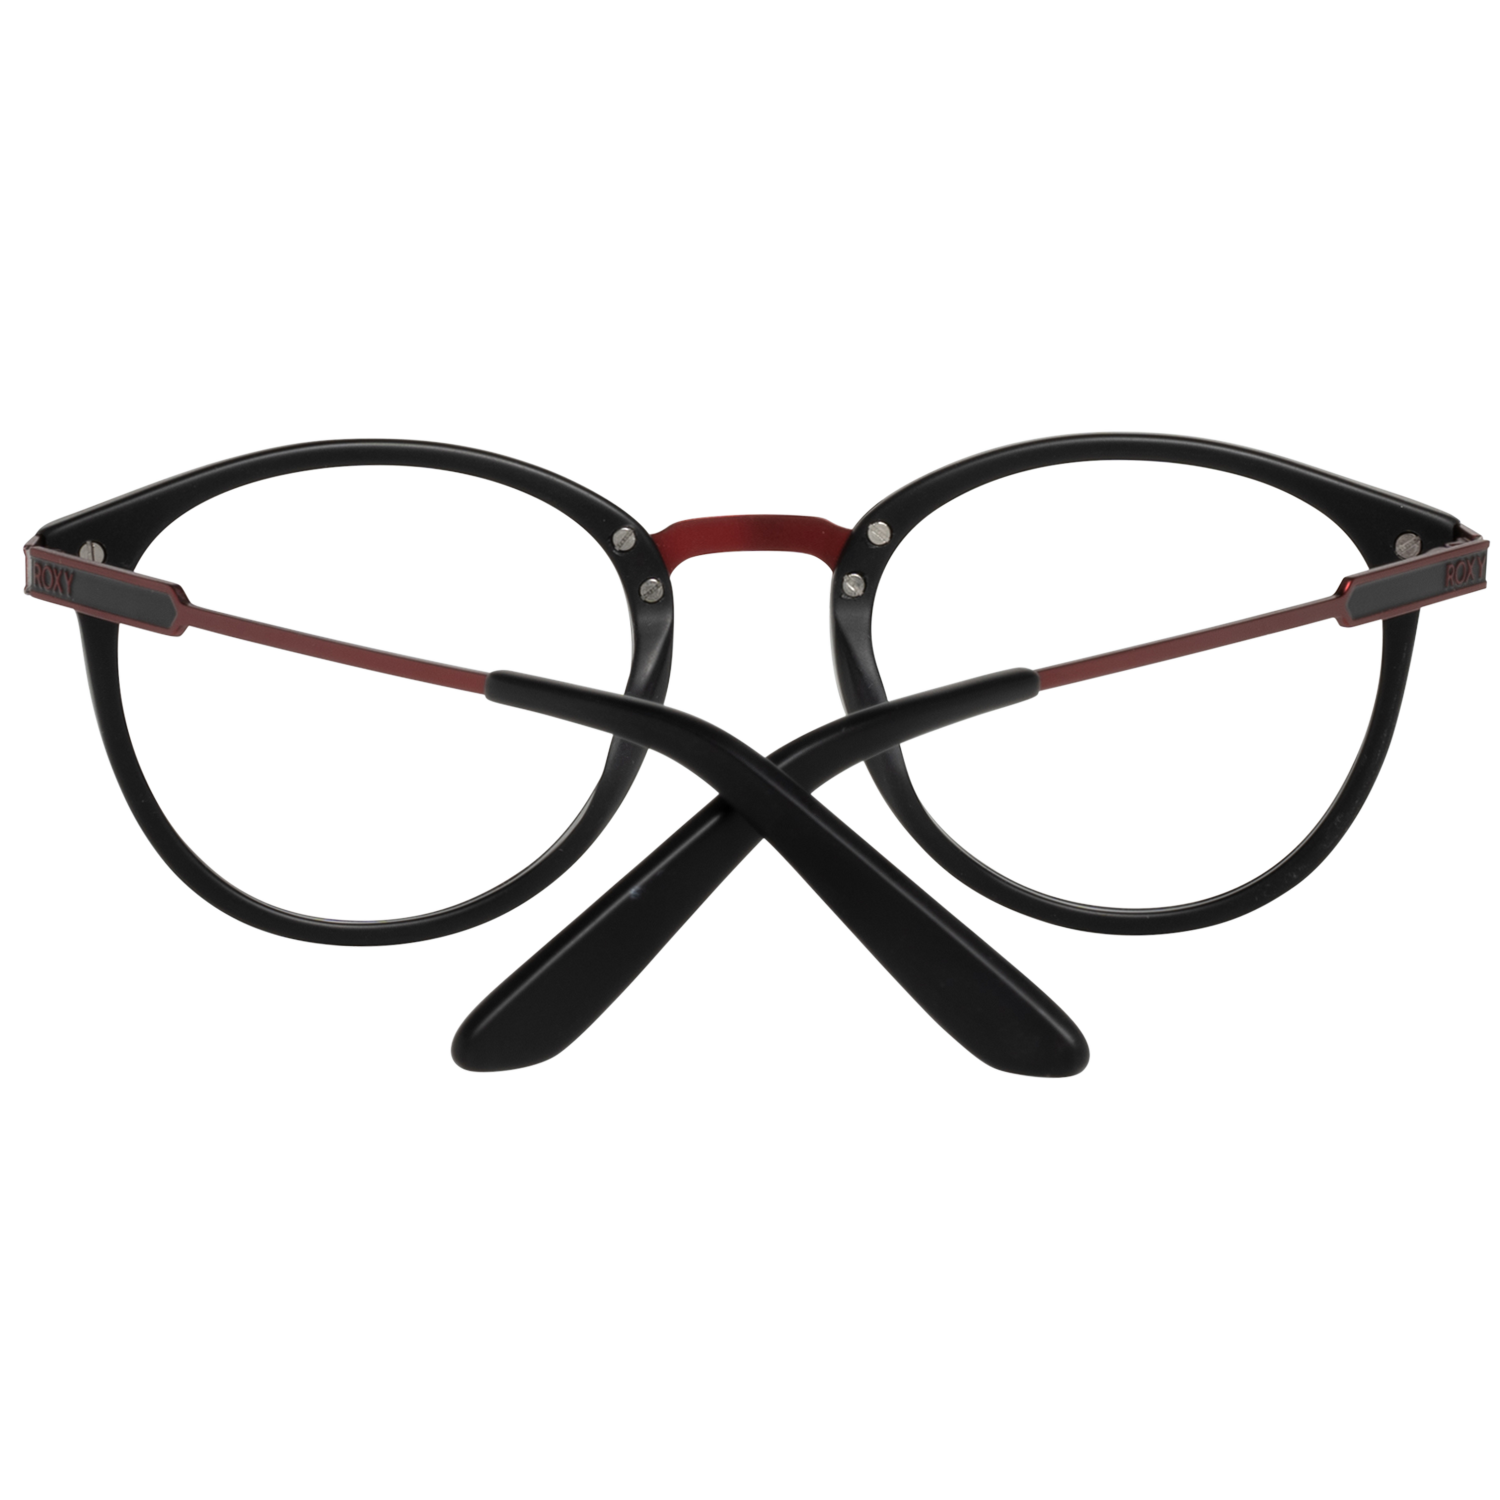 Roxy Frames Roxy Glasses Optical Frame ERJEG03040 XKKM 47 Eyeglasses Eyewear UK USA Australia 